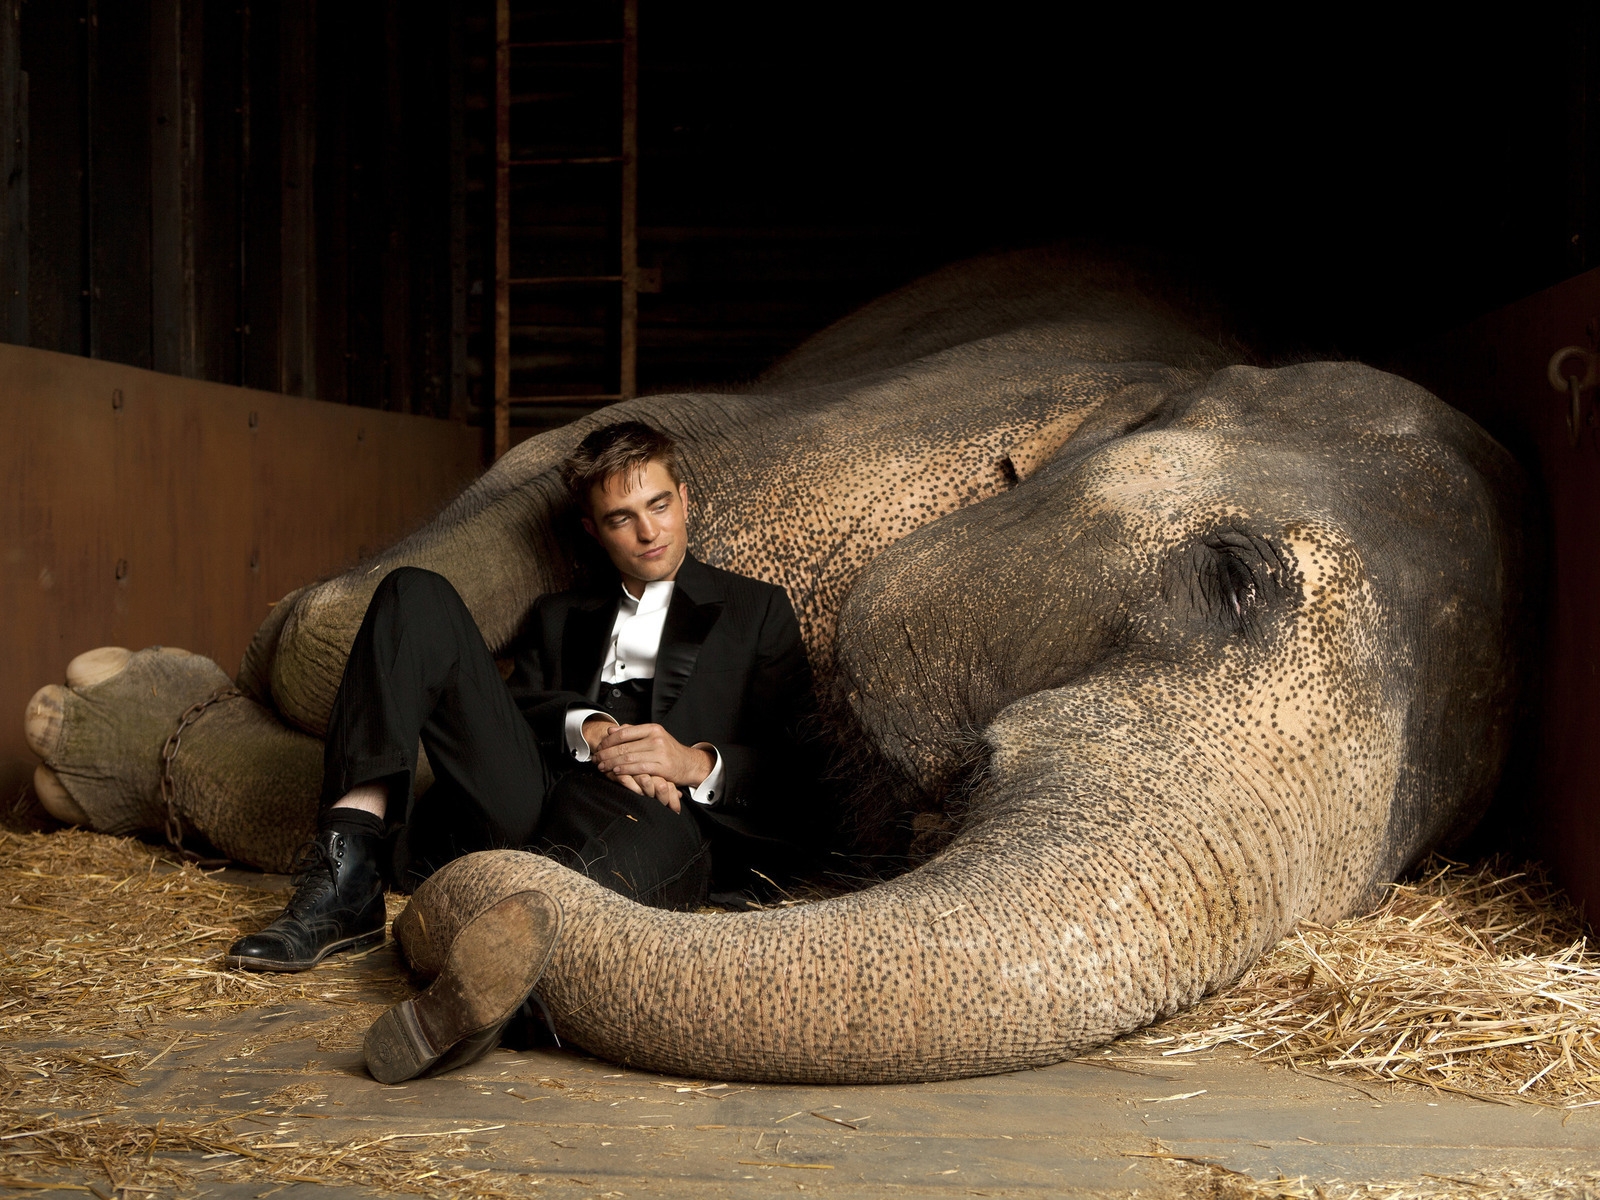 Robert Pattinson Close to Elephant for 1600 x 1200 resolution